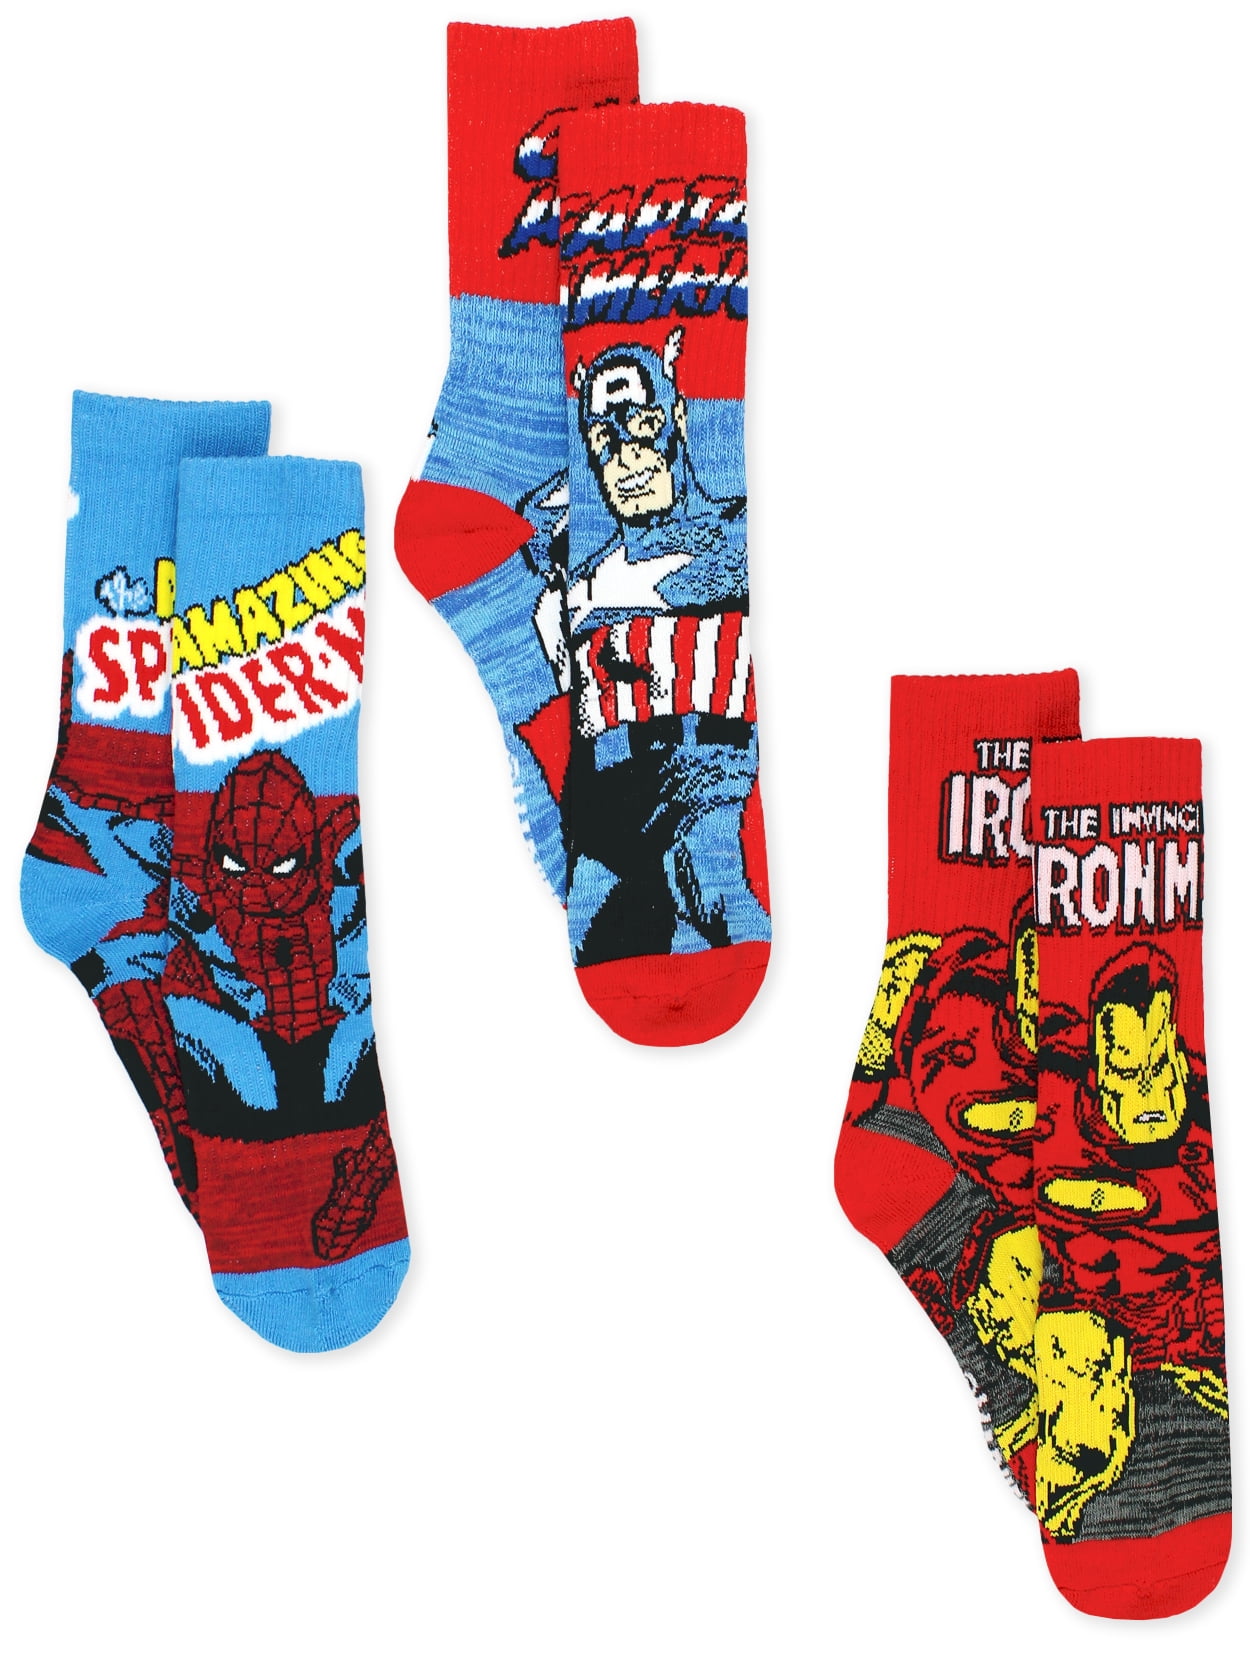 Marvel Original The Avengers Characters Captain America Iron Man Boys Ankle Length Socks Cotton Rich Set 3-Pack 6 Child 2 UK Size